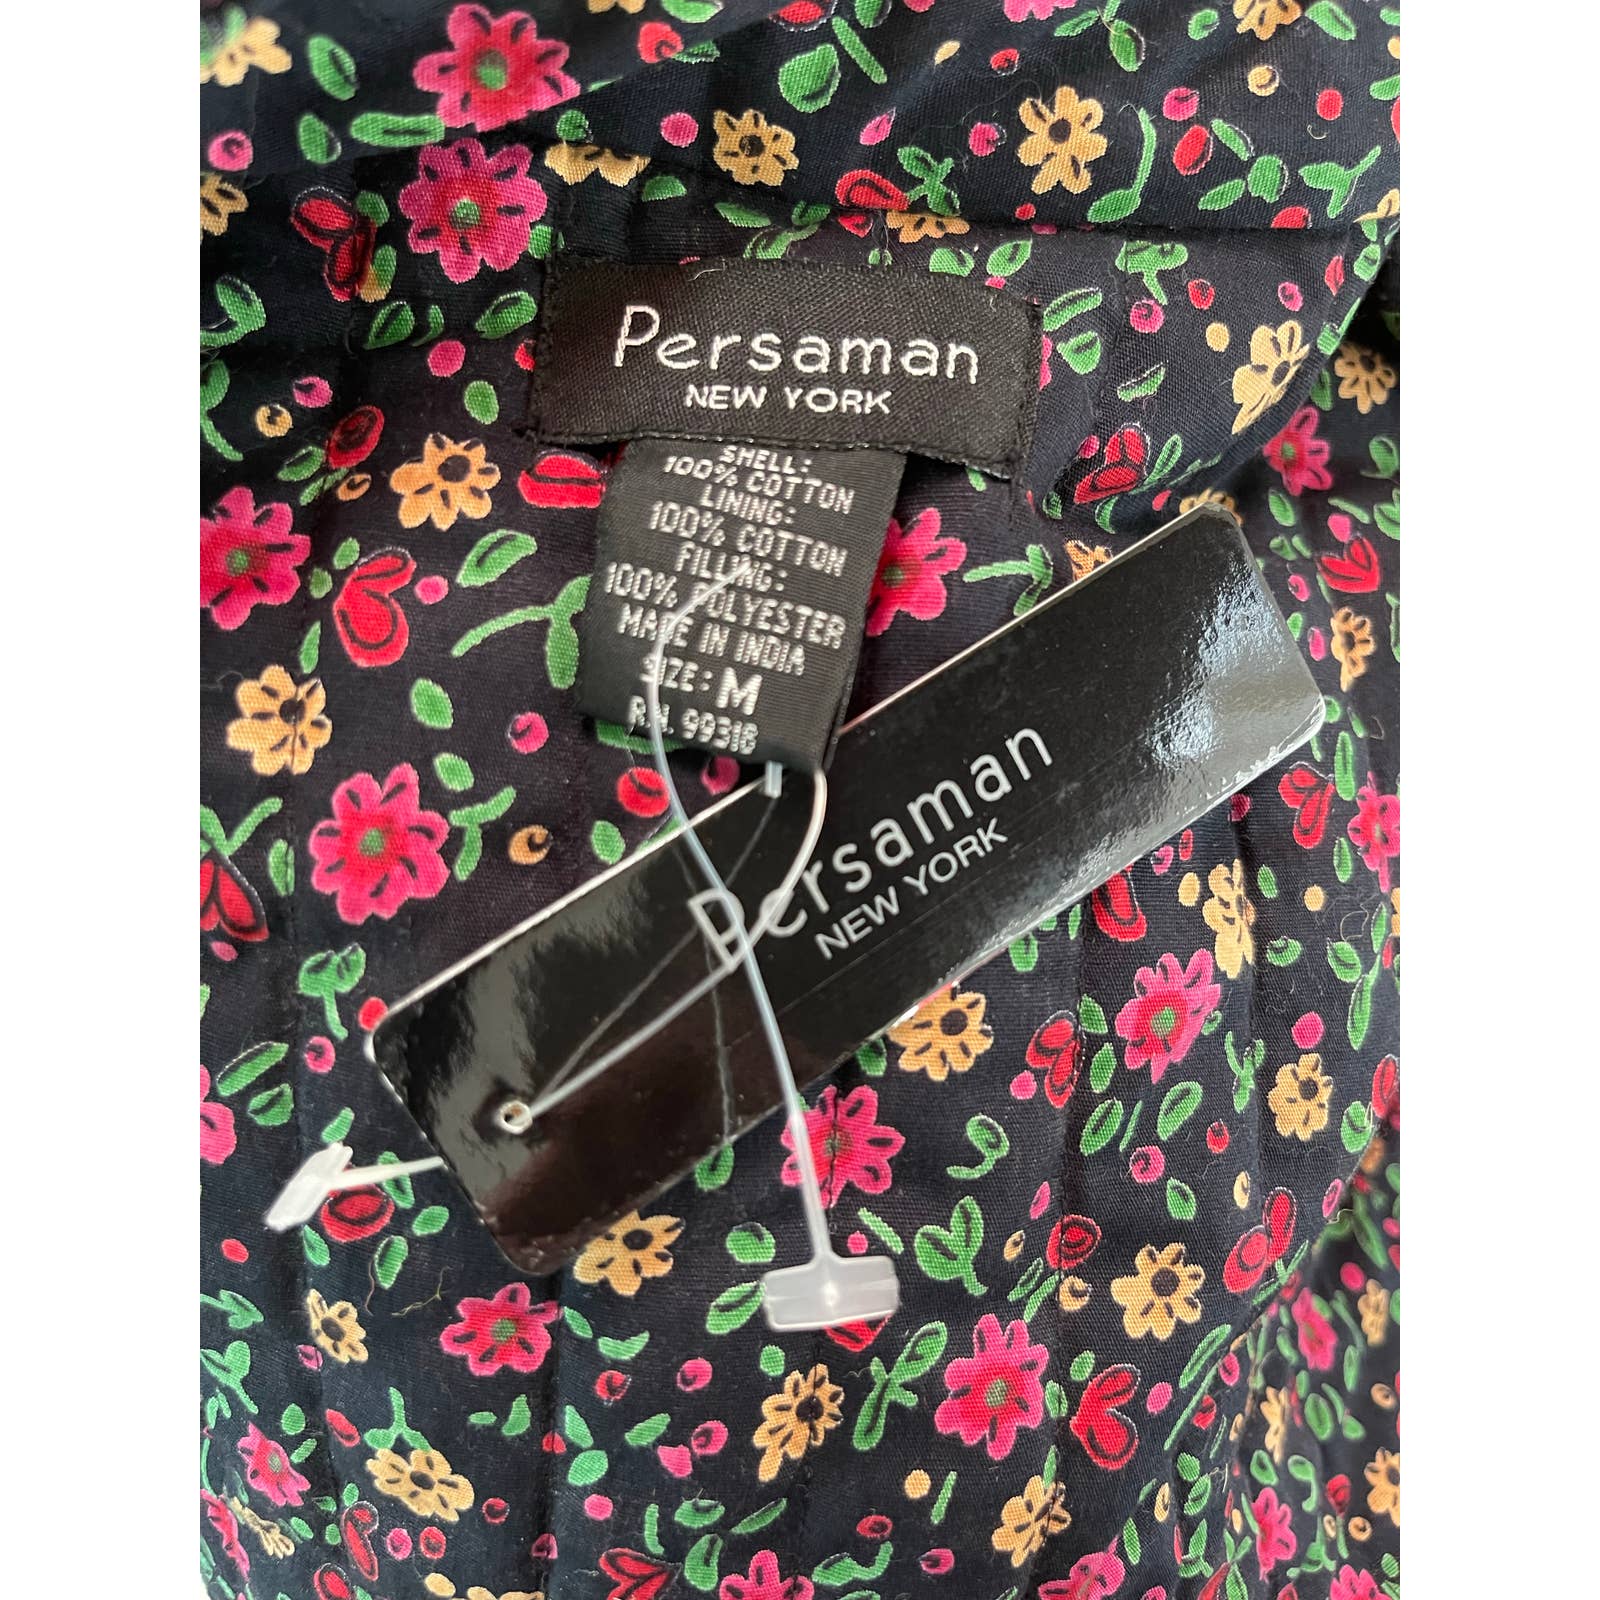 PersamenVintage Deadstock Persaman New York Quilted Jacket - Vera Bradley Style - Floral - Black Dog Vintage